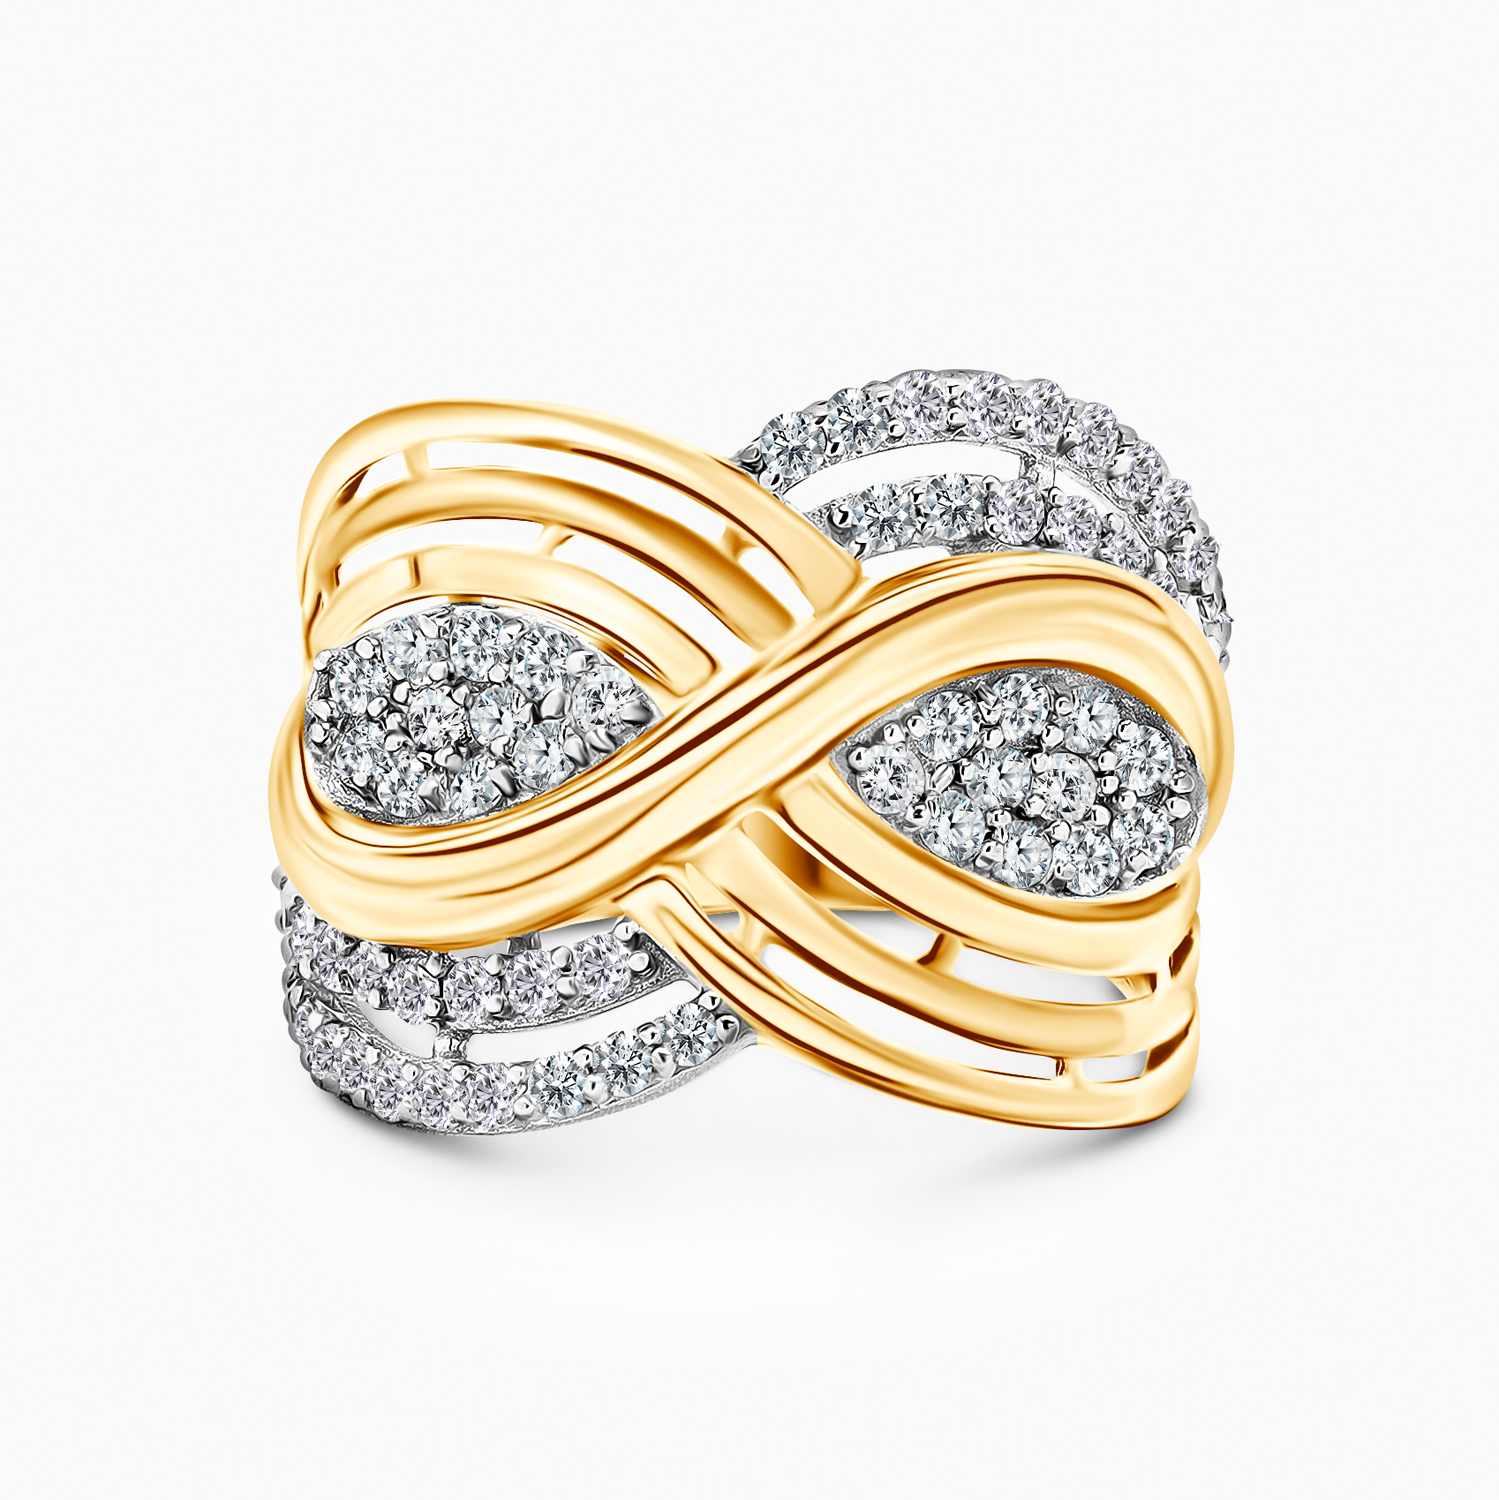 Old Mine Cut Diamond Ring in 22K Gold – Caleb Meyer Studio